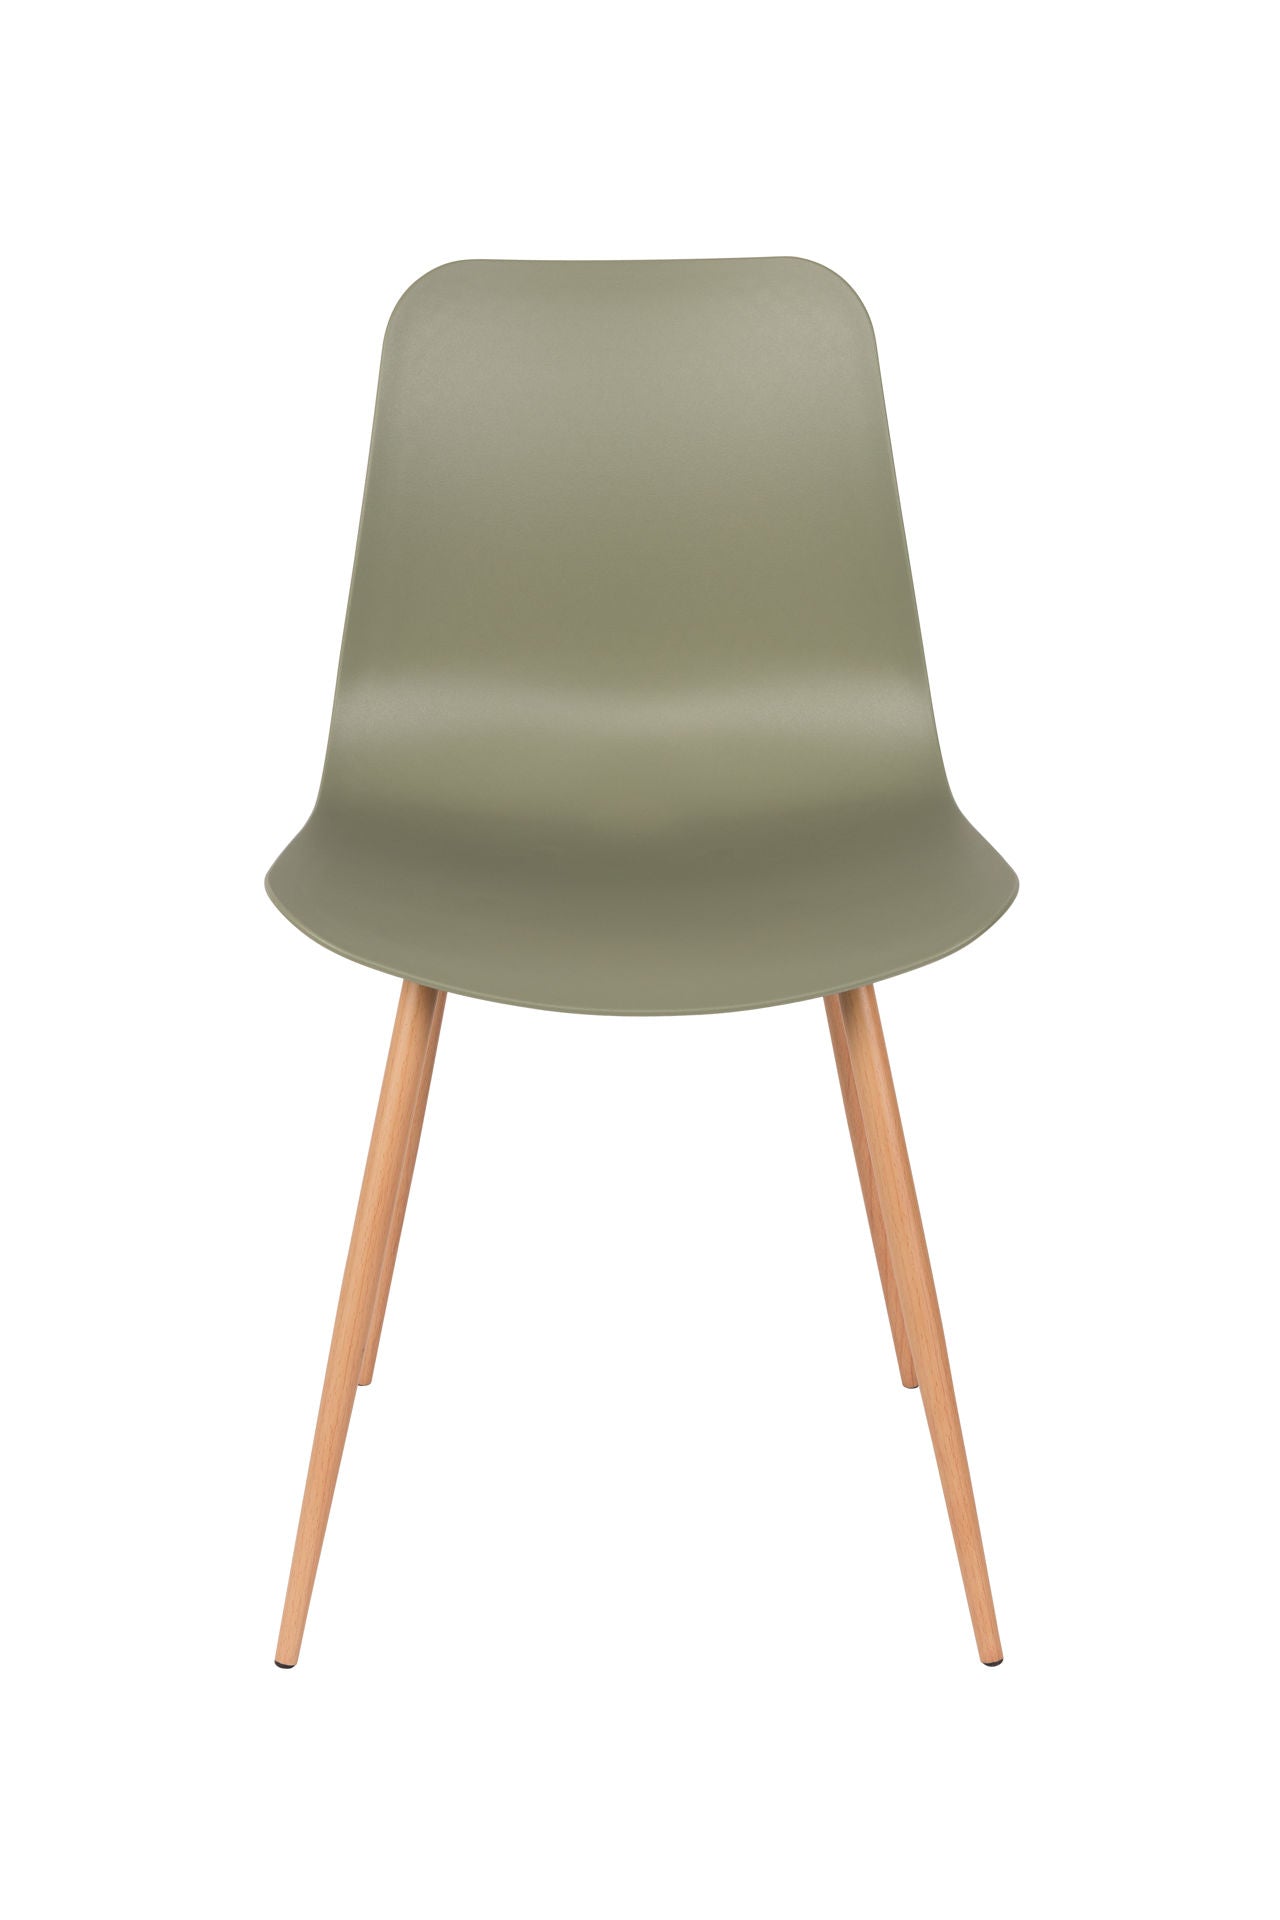 Nancy's South Kensington Chair - Scandinave - Vert, Marron - Polypylène, Fer, Bois - 49 cm x 44,5 cm x 80 cm